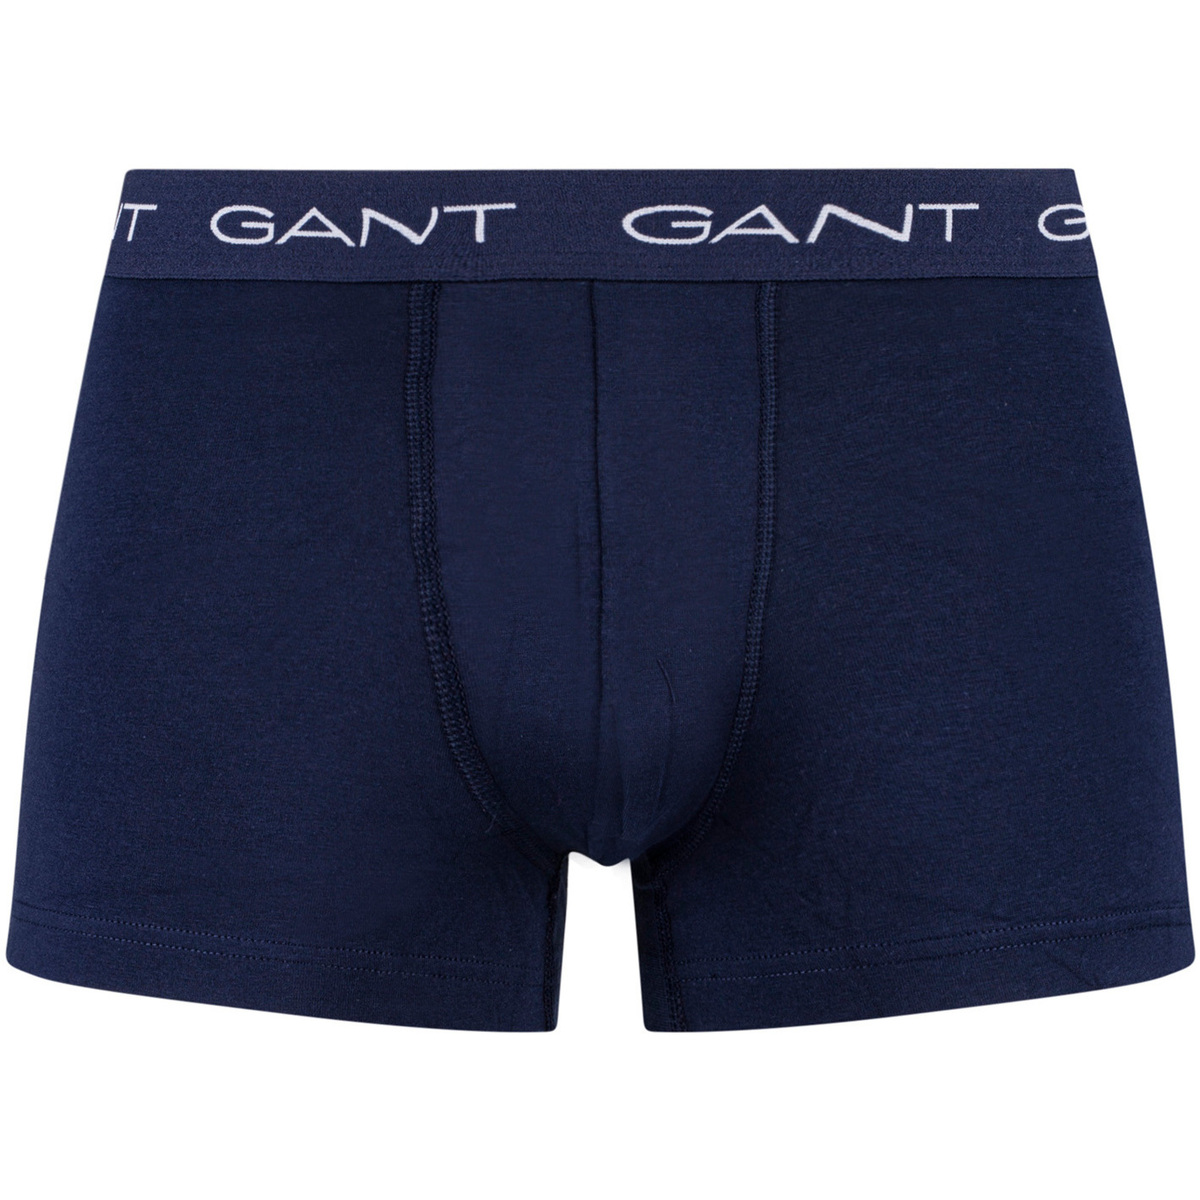 Gant Bleu Lot de 3 malles Essentials AwYH0WNz